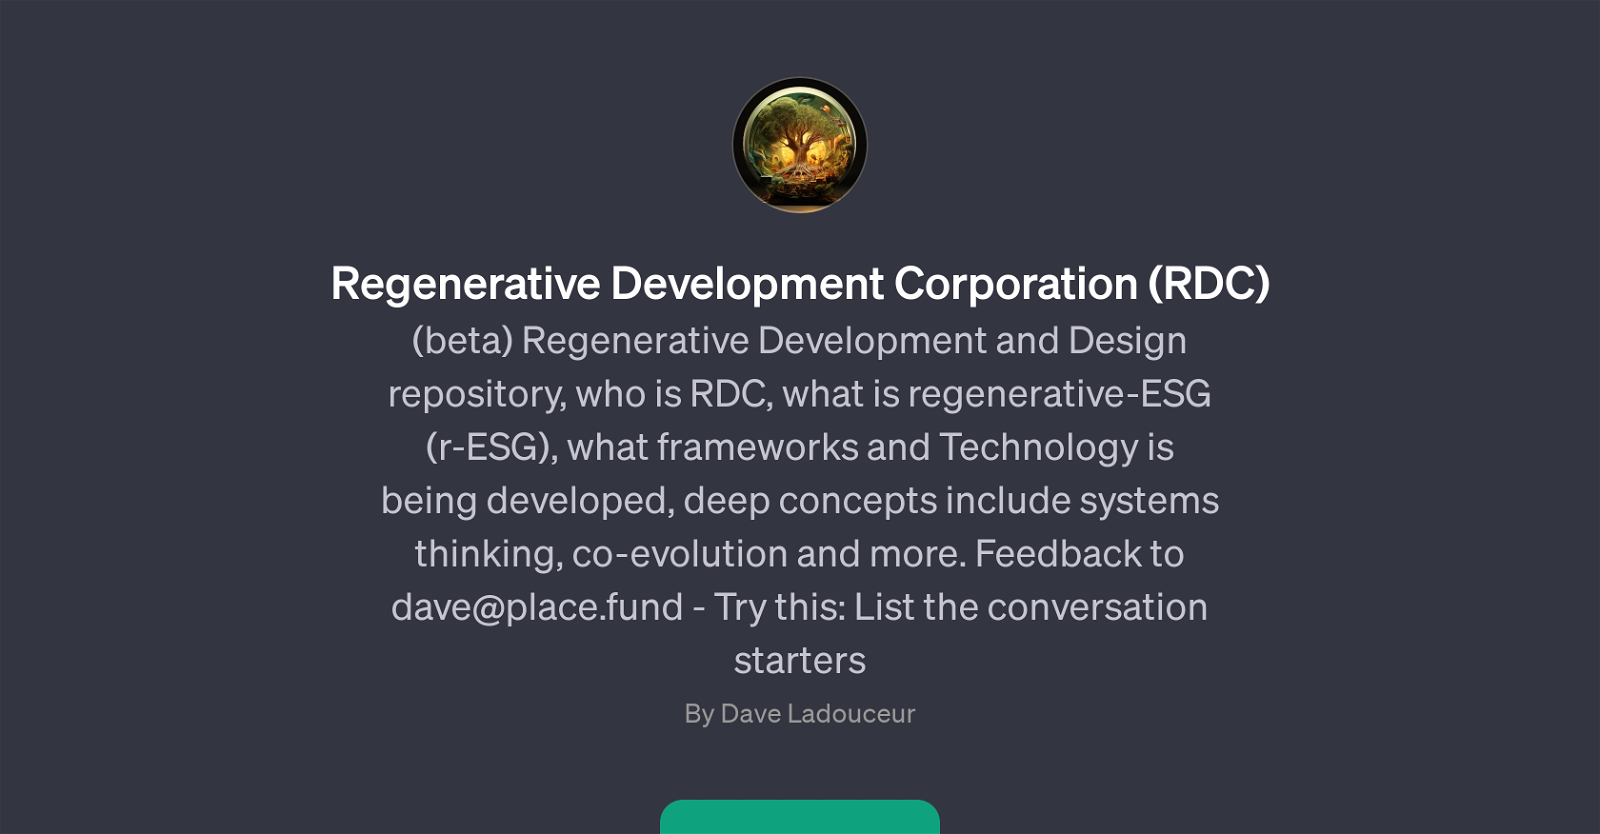 Regenerative Development Corporation (RDC) GPT website